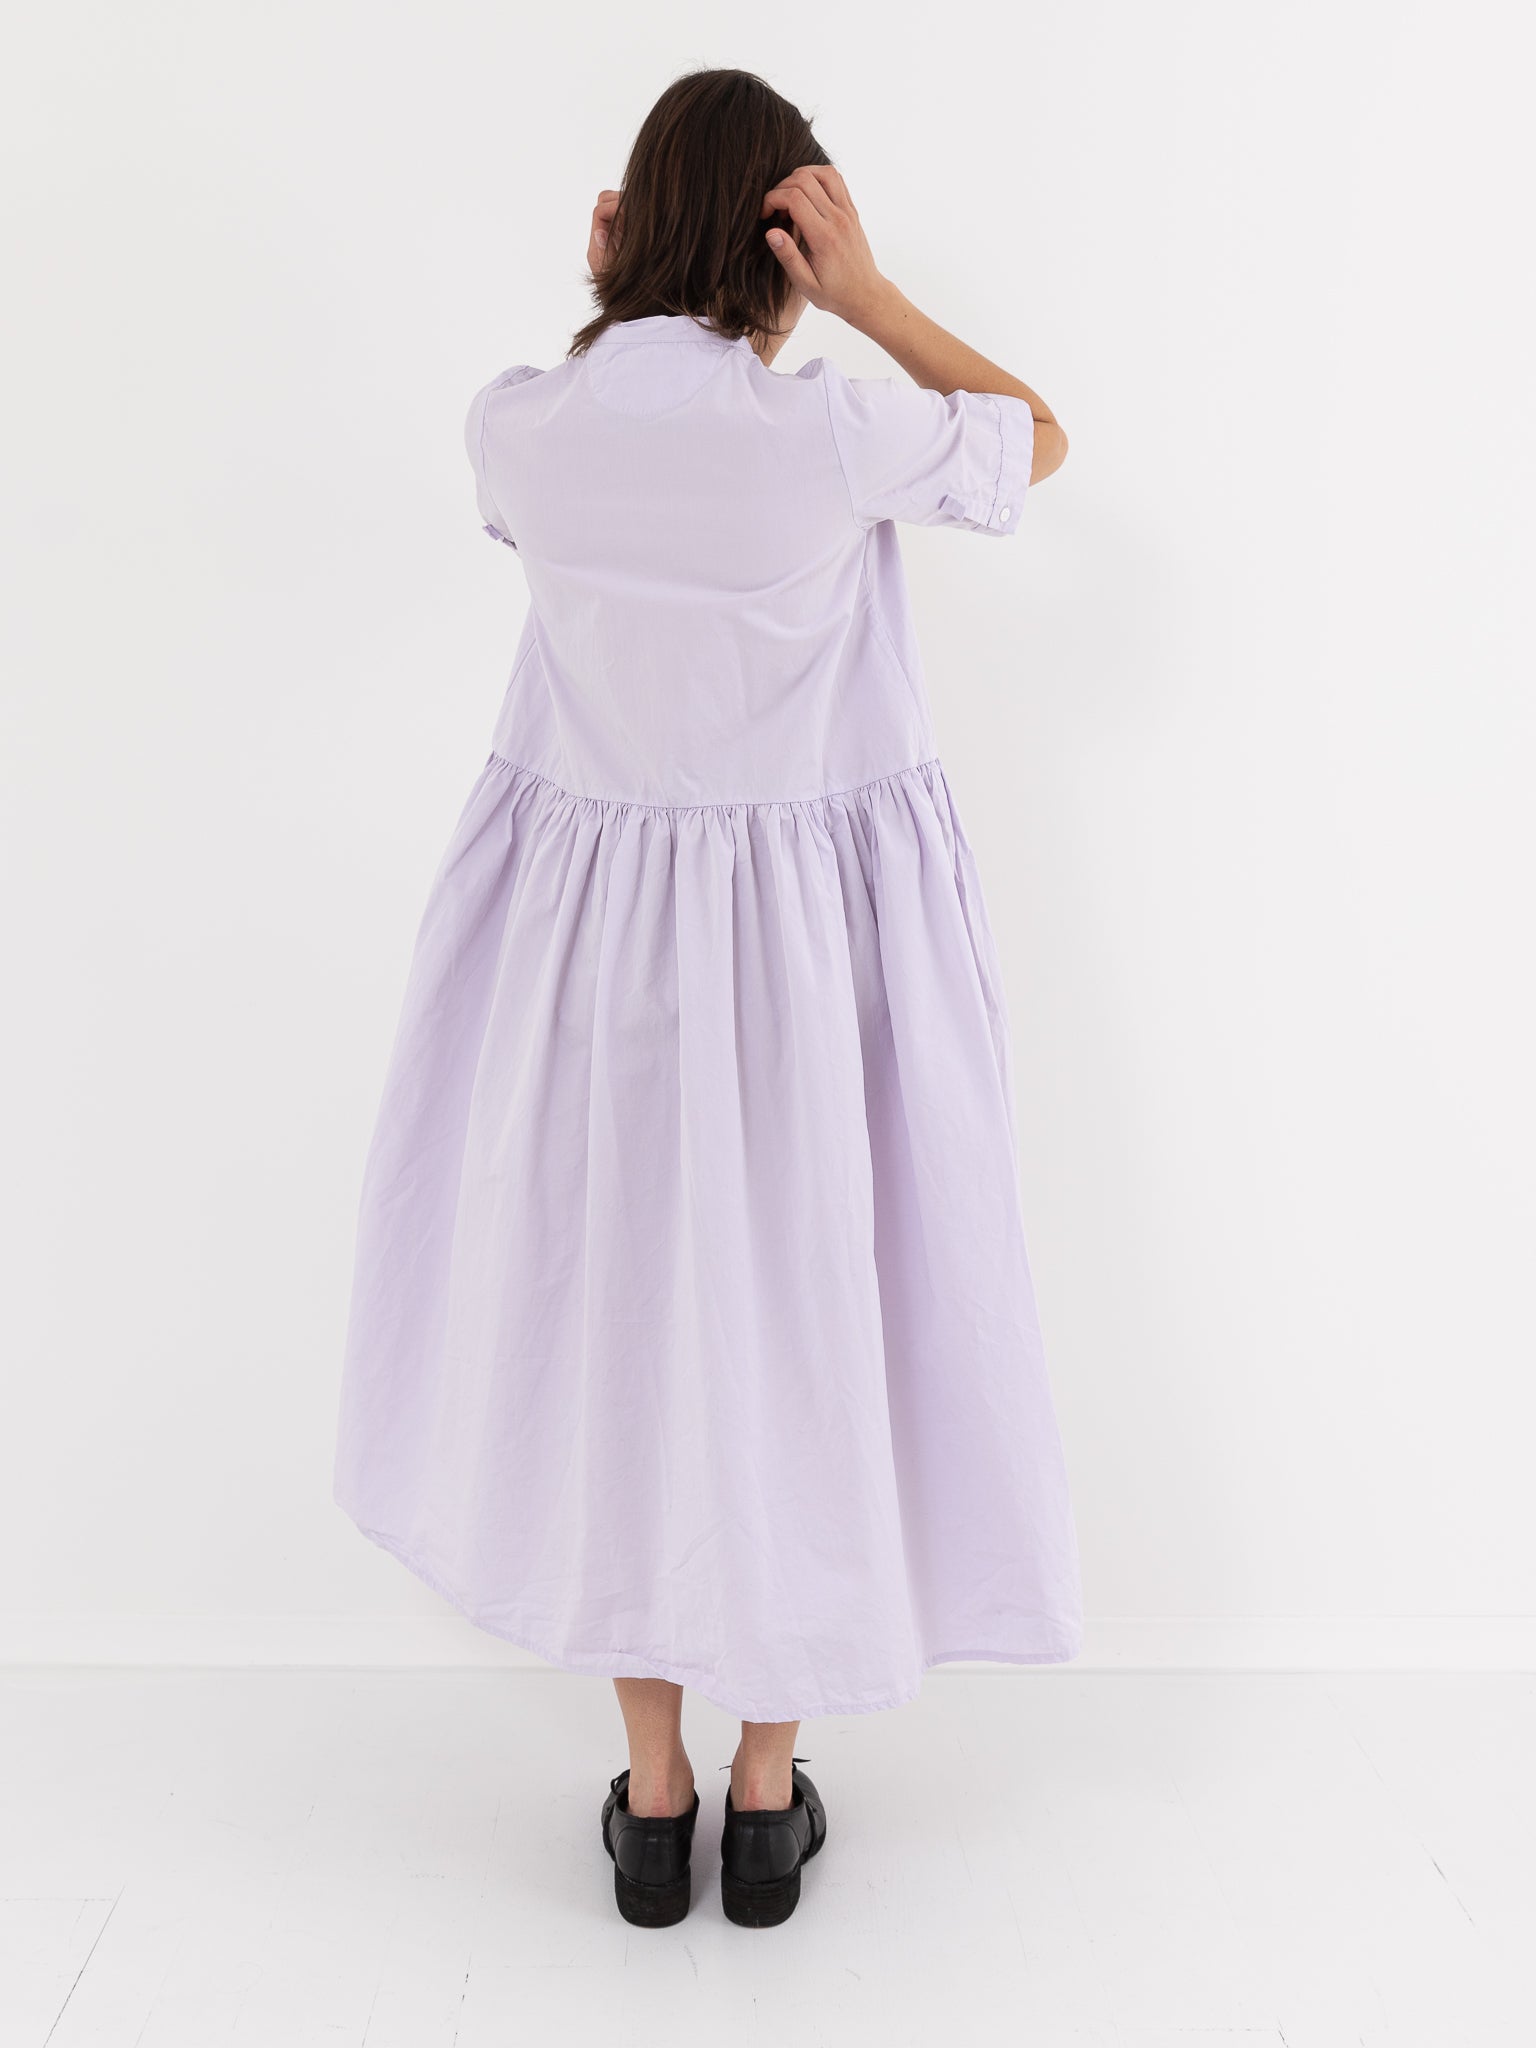 Bergfabel Farmer Dress, Lavender - Worthwhile, Inc.